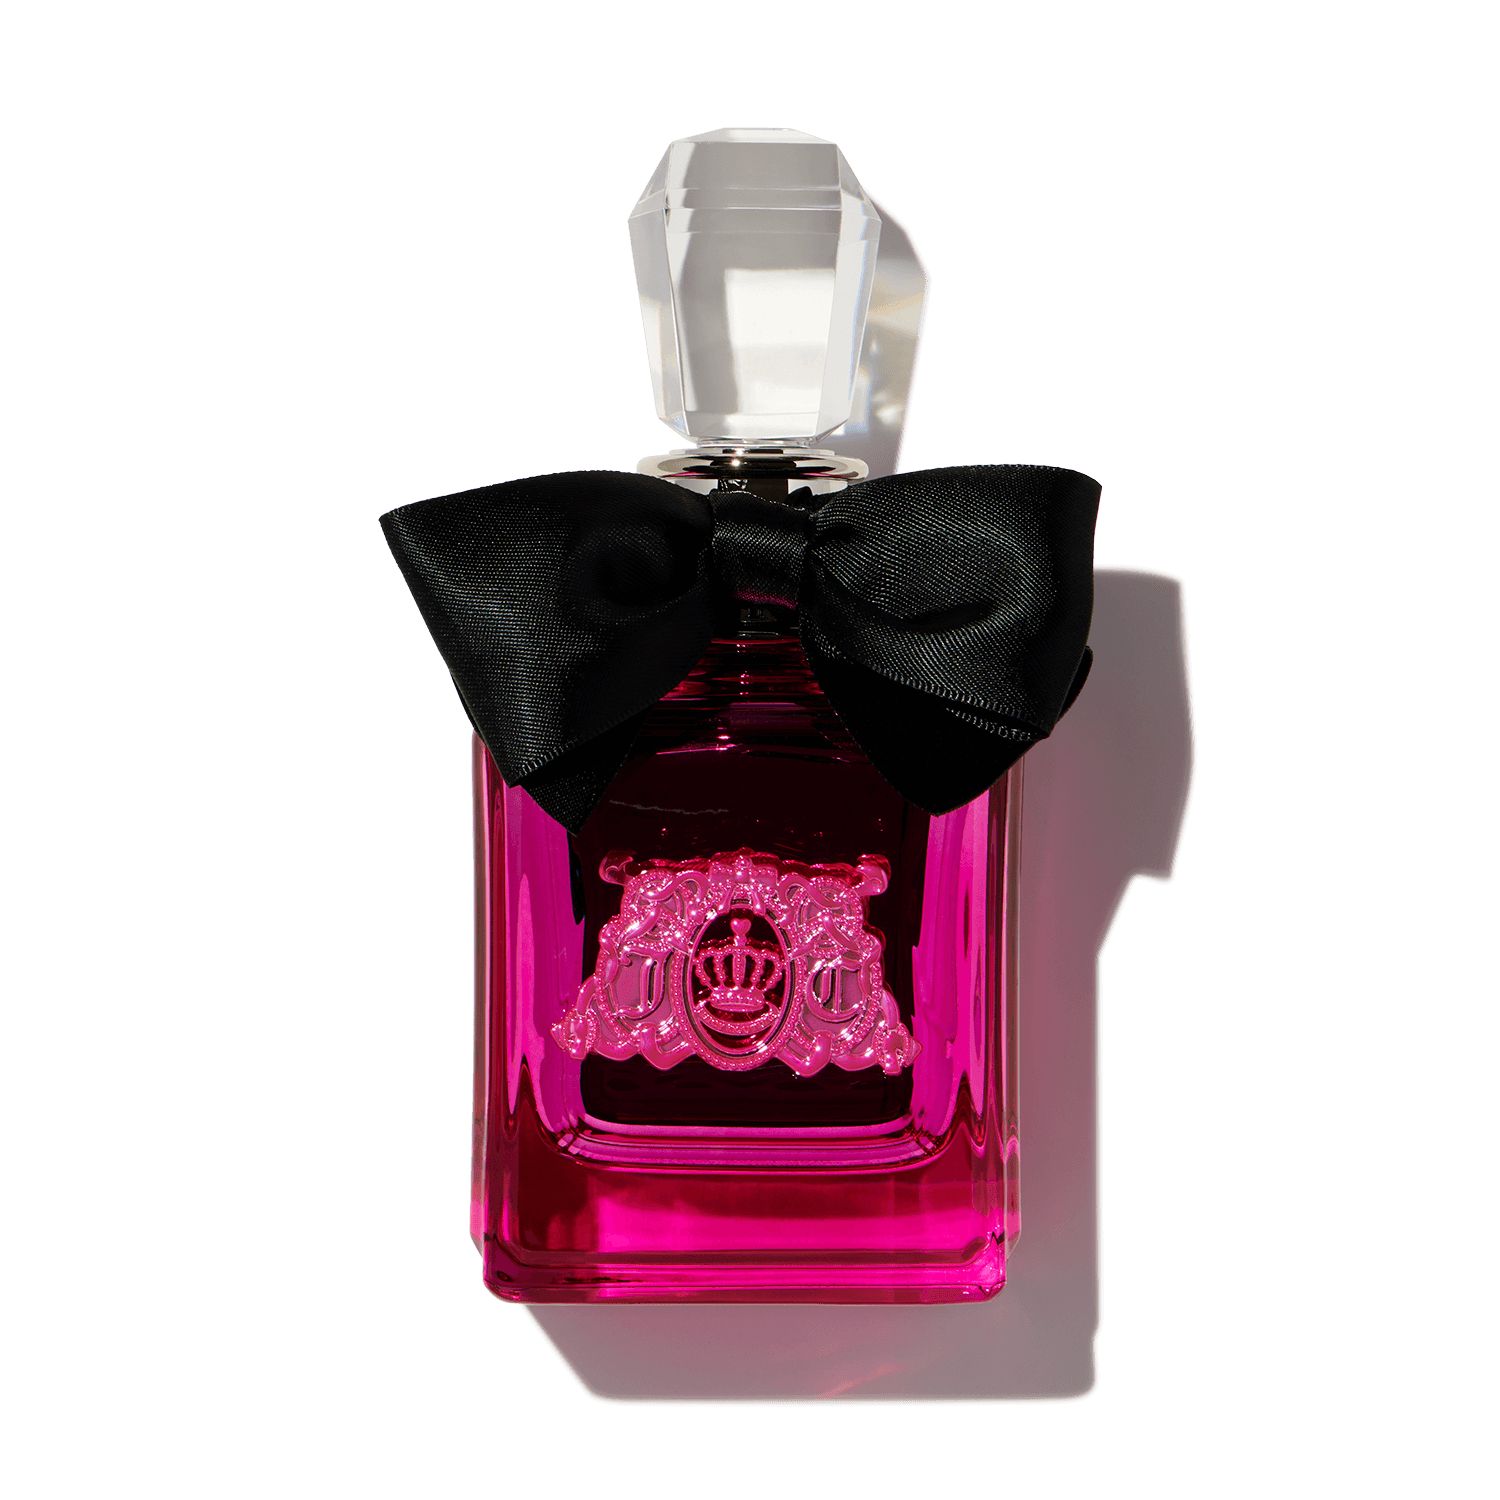 Viva La Juicy Noir by Juicy Couture $16.95/month | Scentbird